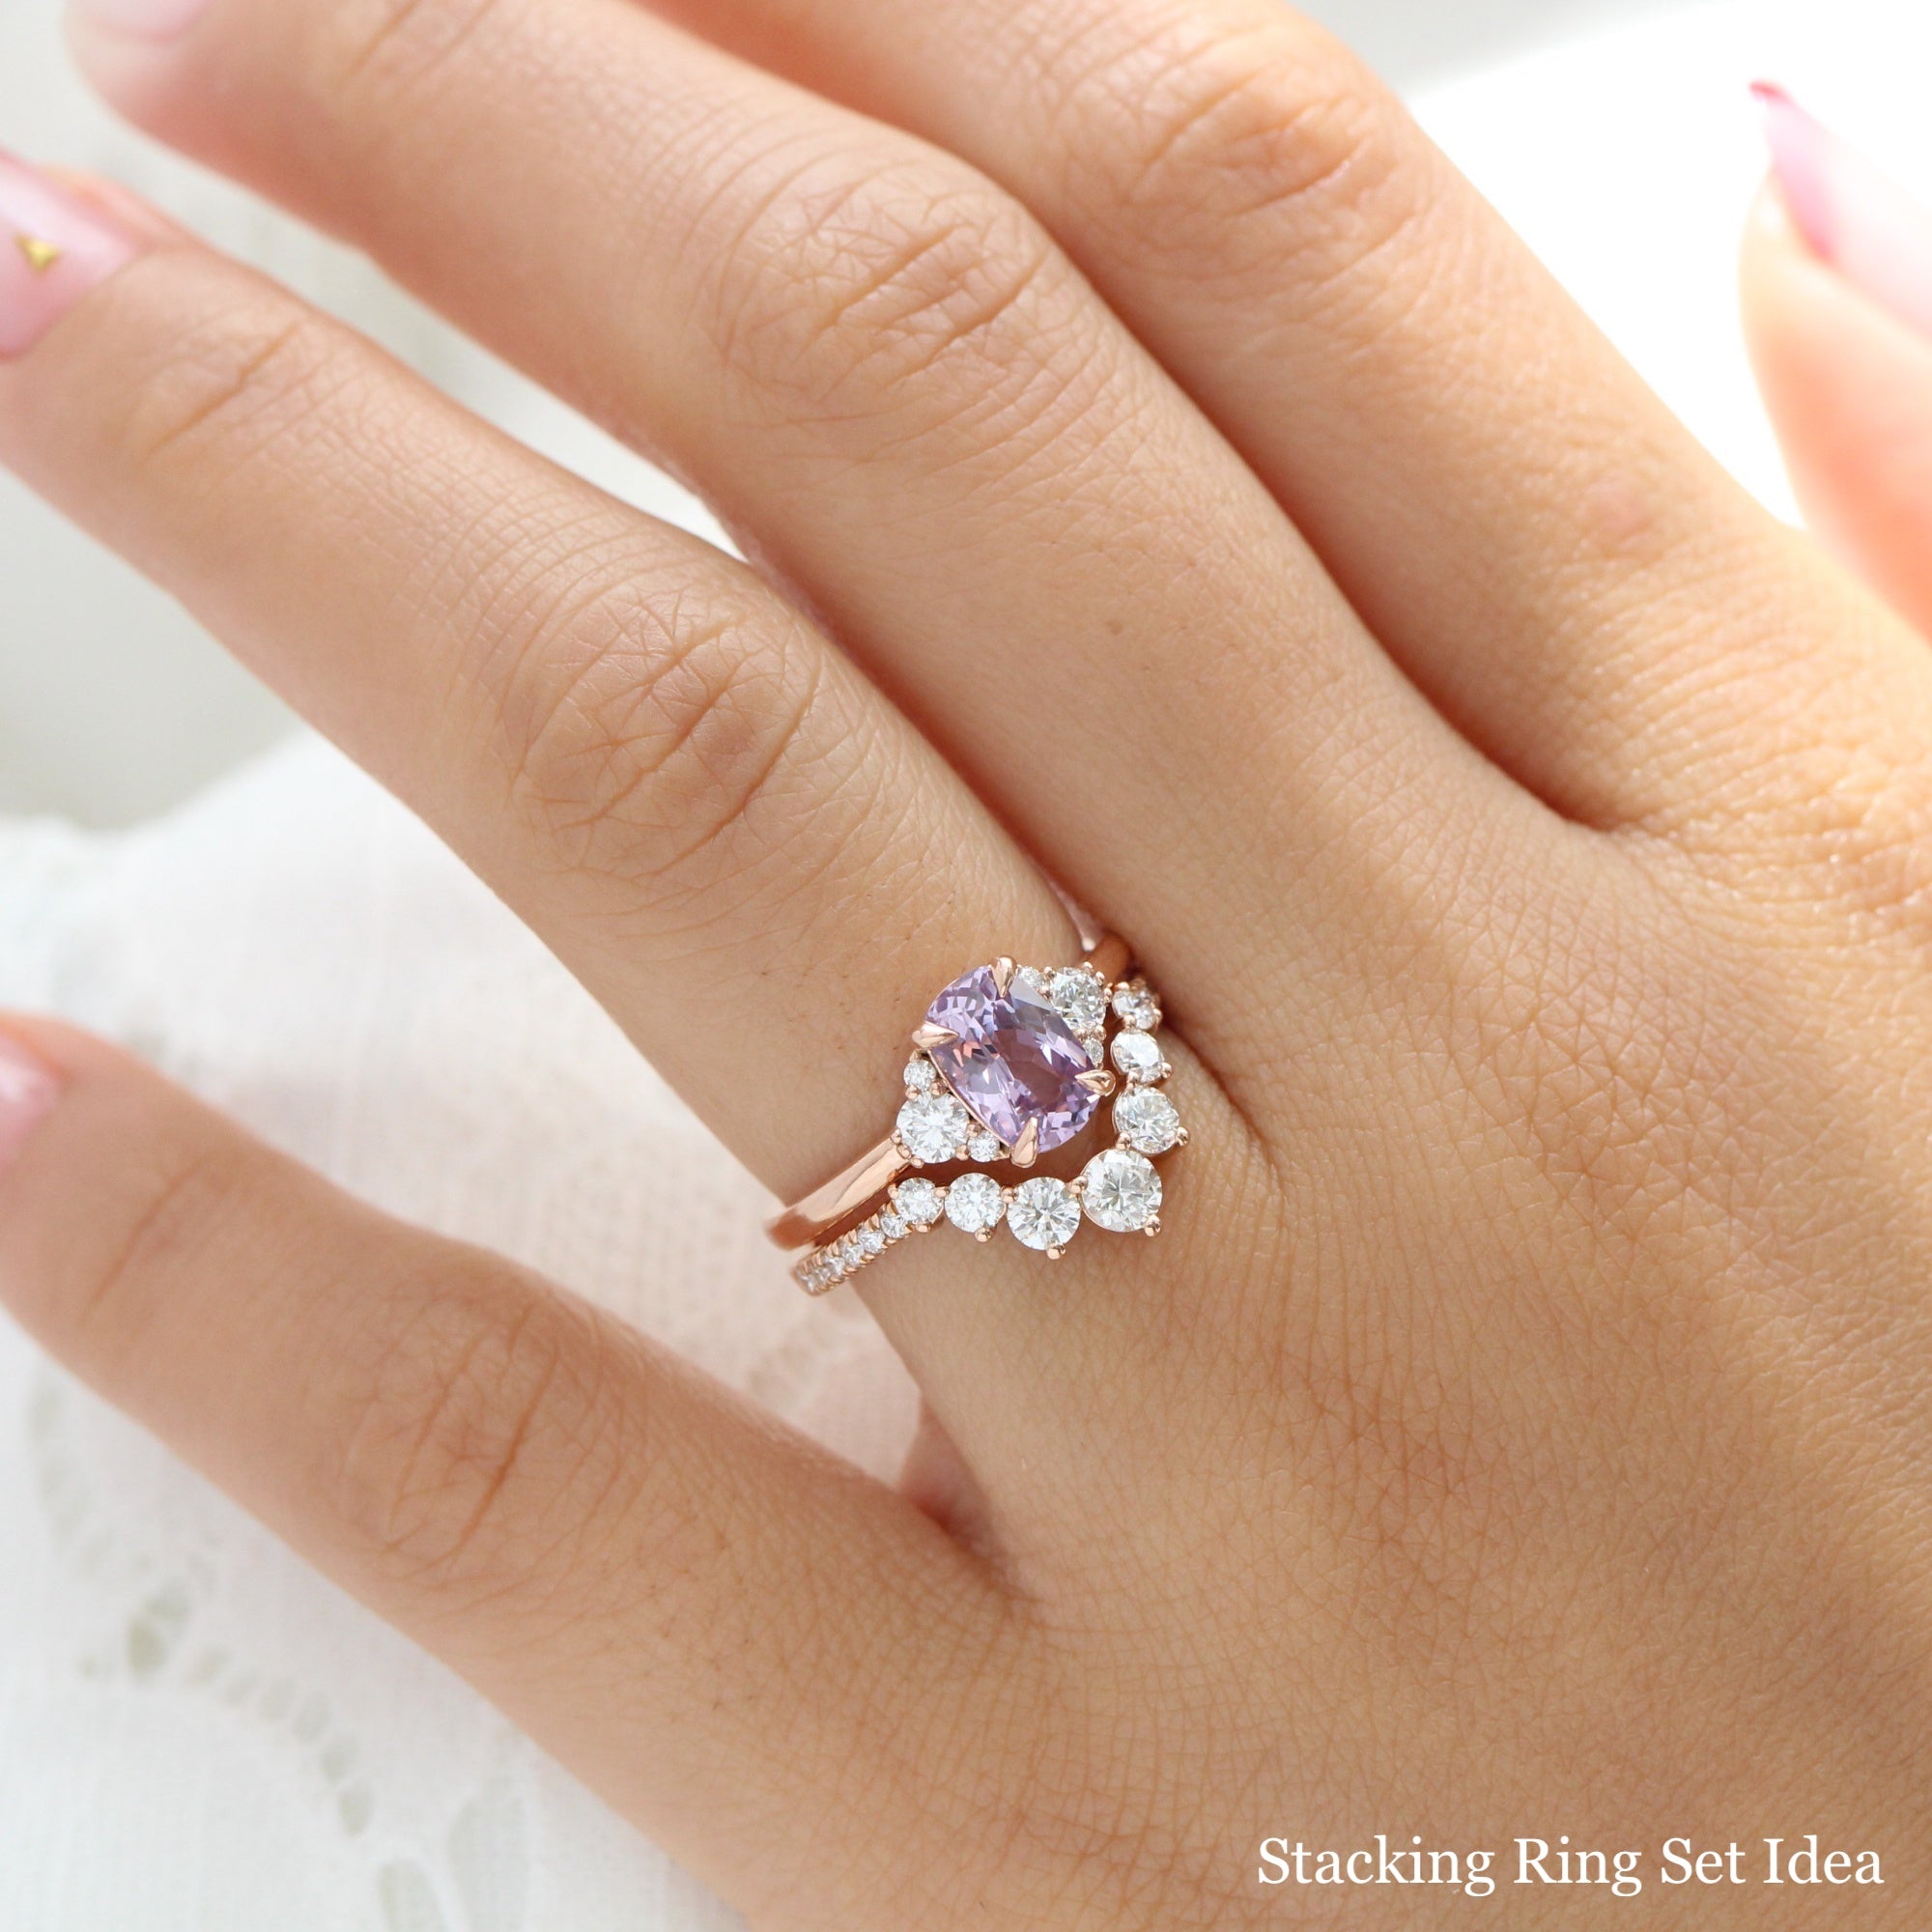 Cushion lavender purple sapphire diamond ring rose gold 3 stone ring la more design jewelry